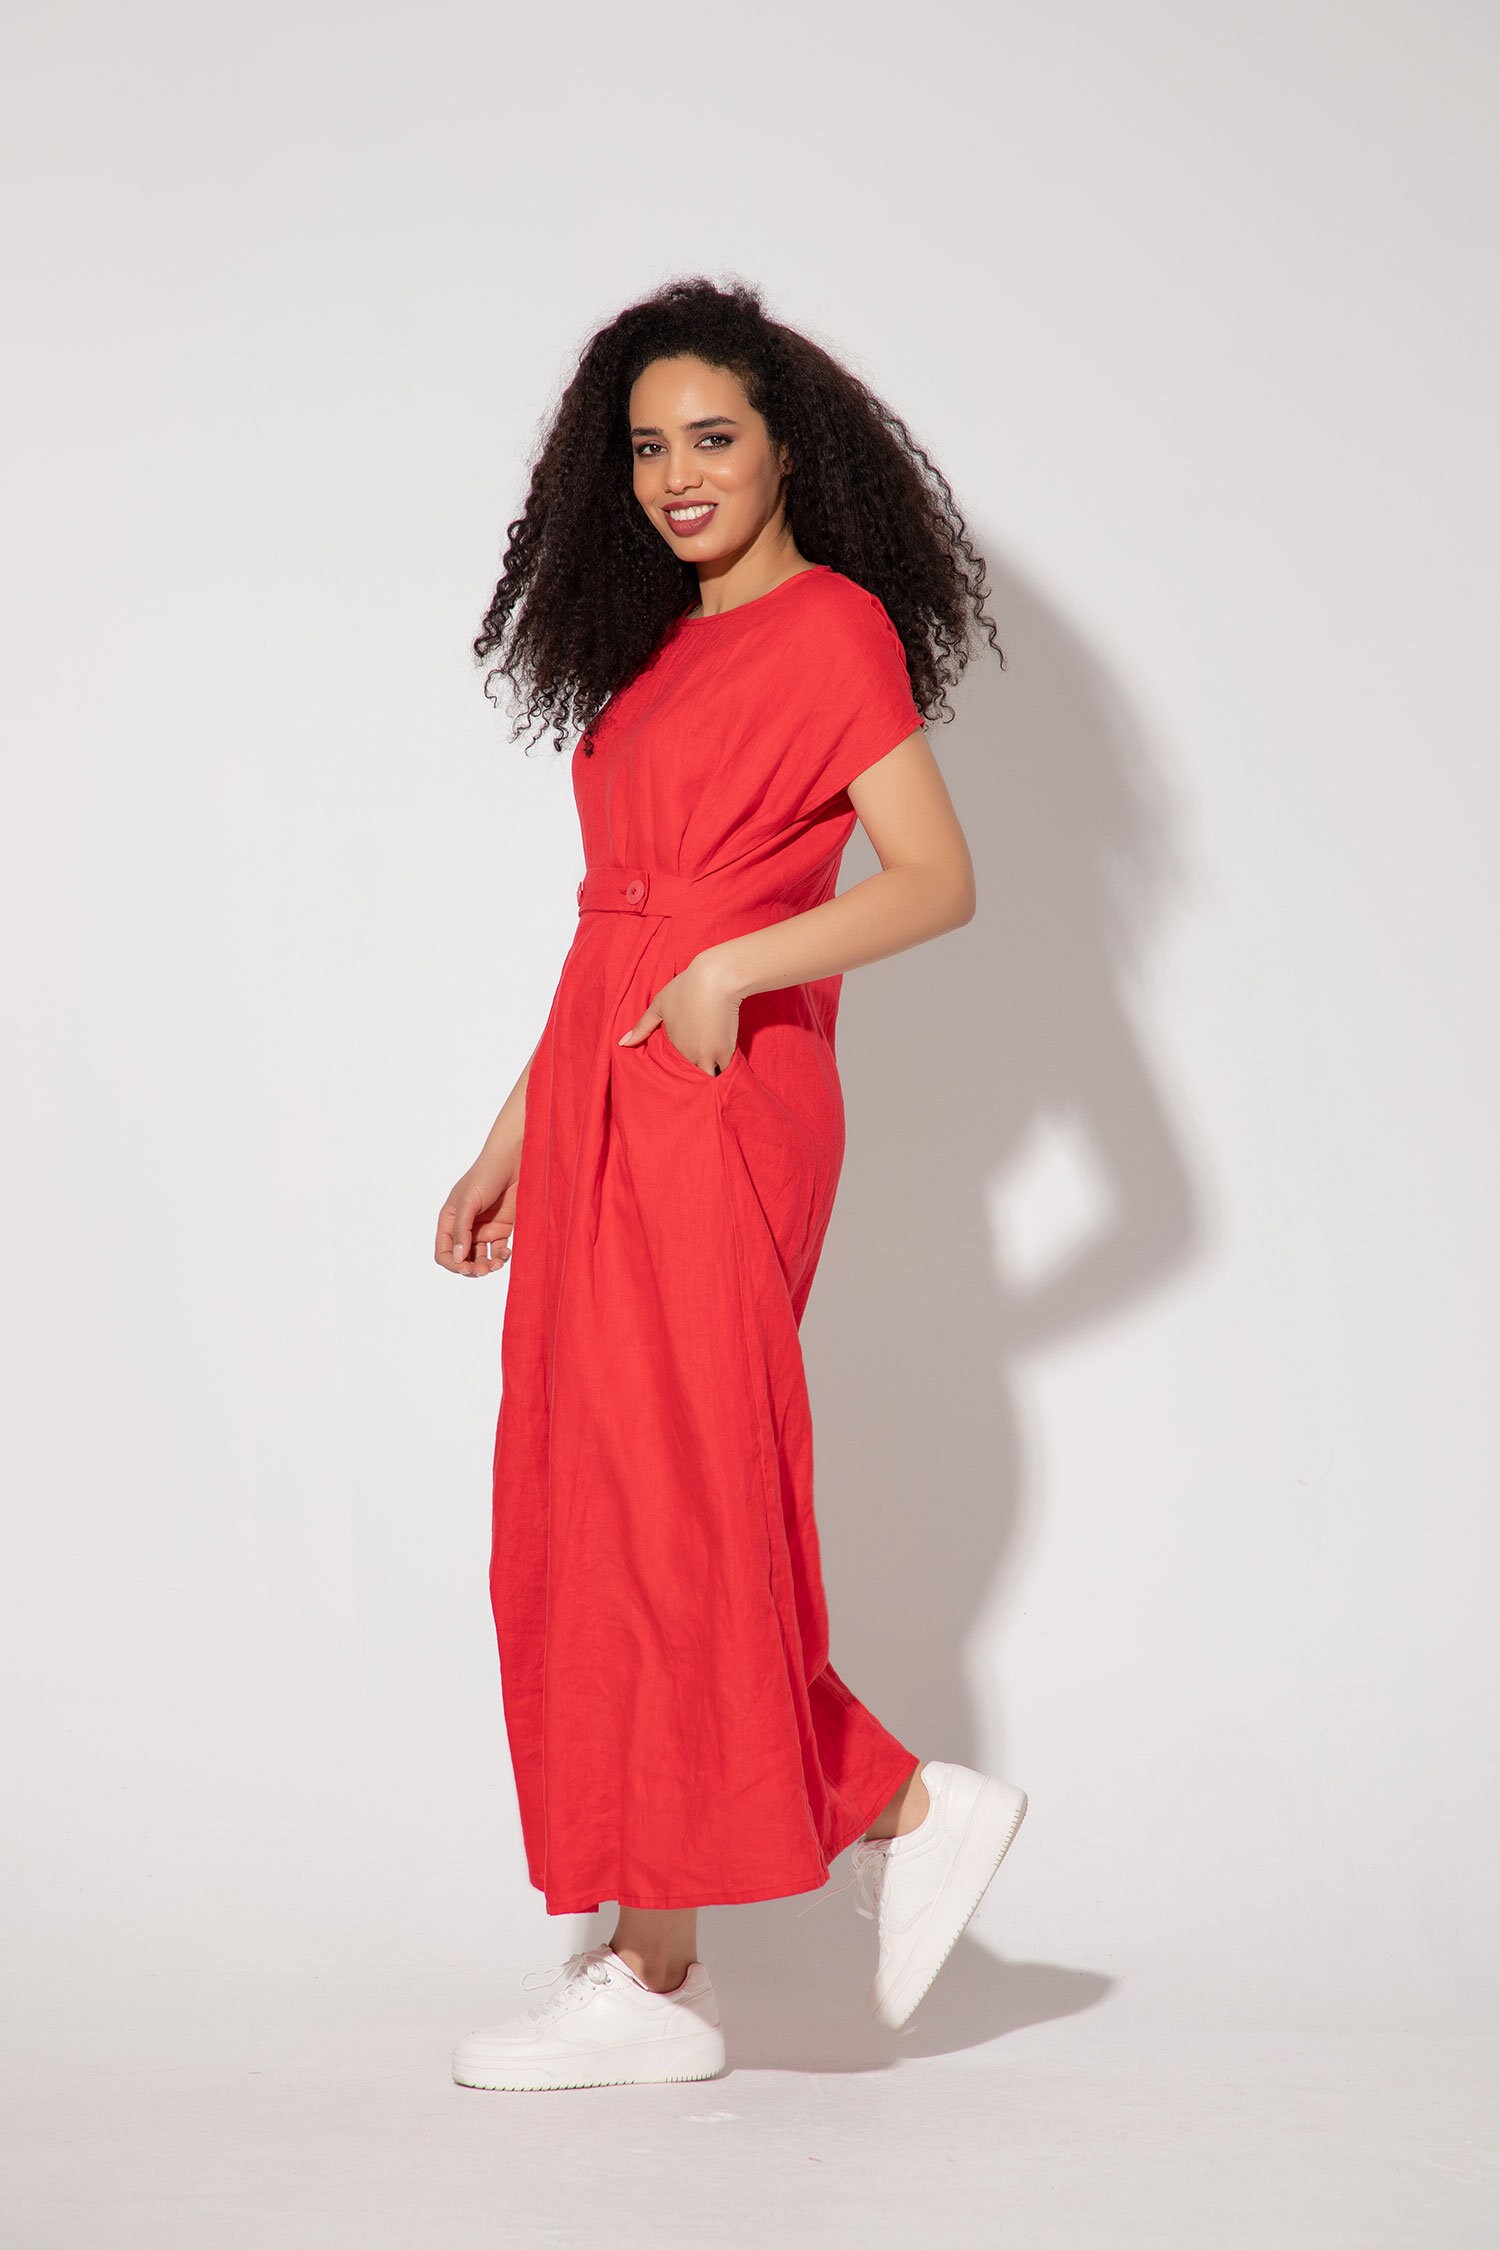 erfaring Forvirrede haj Red Statement Dress MEDORA Maxi Red Dress for Women Dress - Etsy